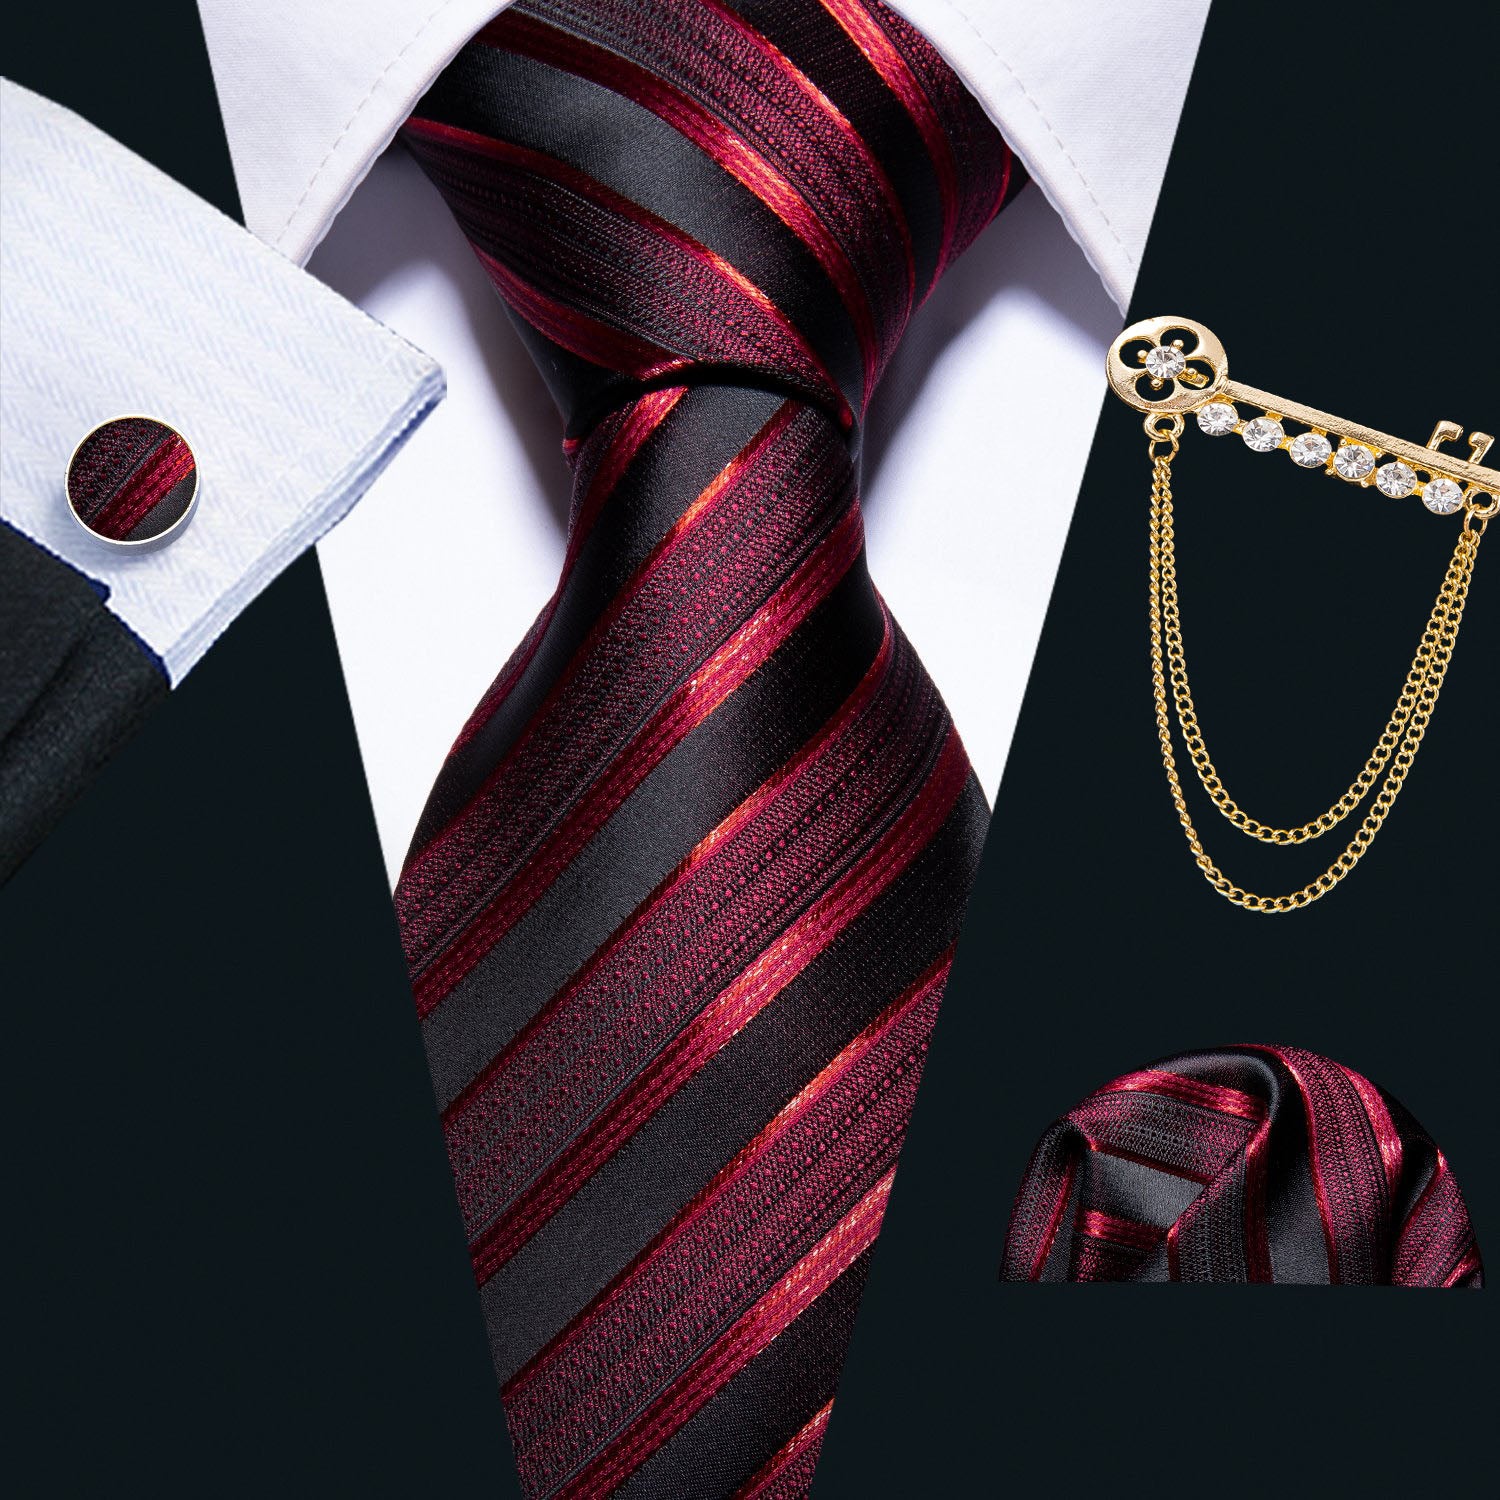 Barry.wang Striped Tie Red Black Men's Silk Tie Pocket Square Cufflinks Lapel Pin Brooch Set